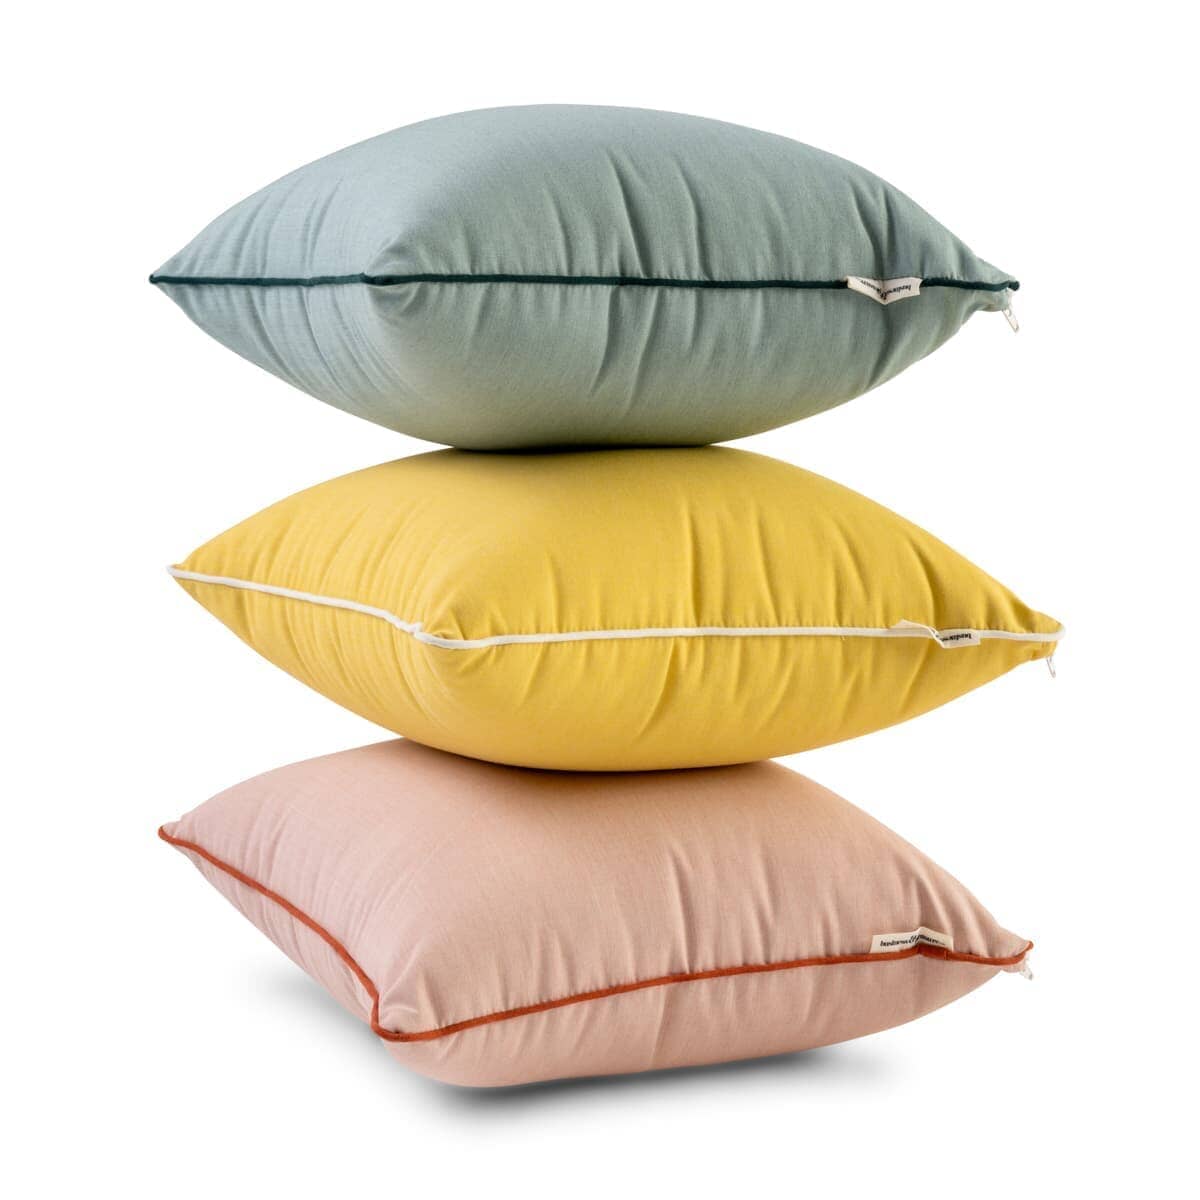 Studio image of small throw pillows